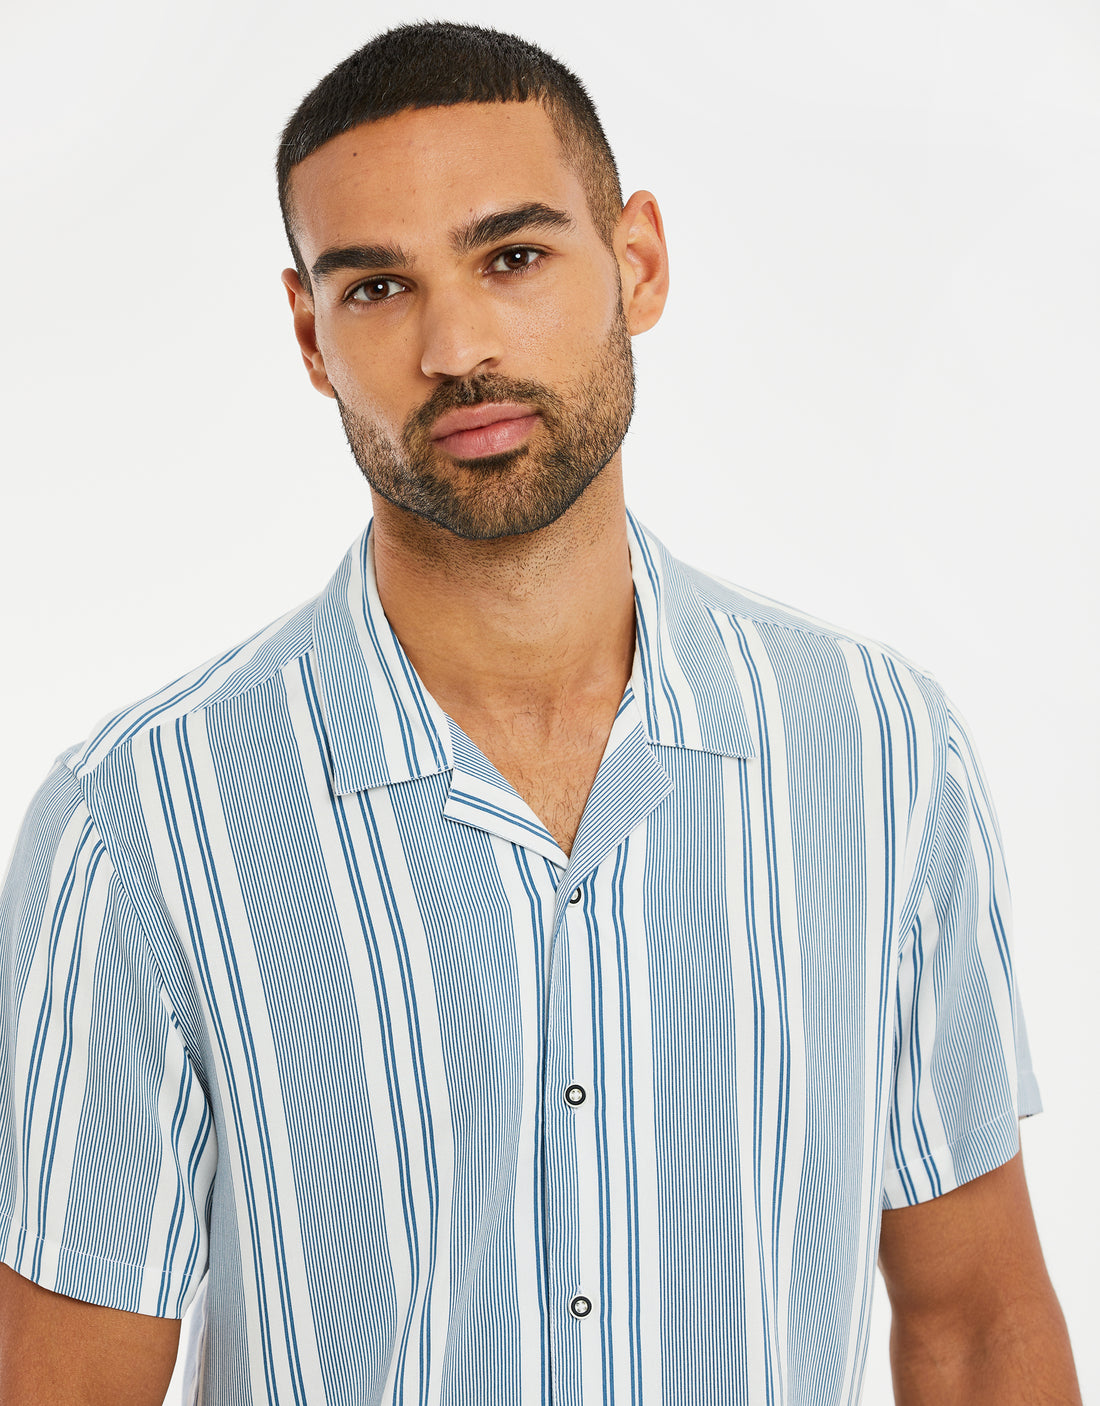 Men's White & Blue Colourblock Striped Short Sleeve Casual Shirt ...